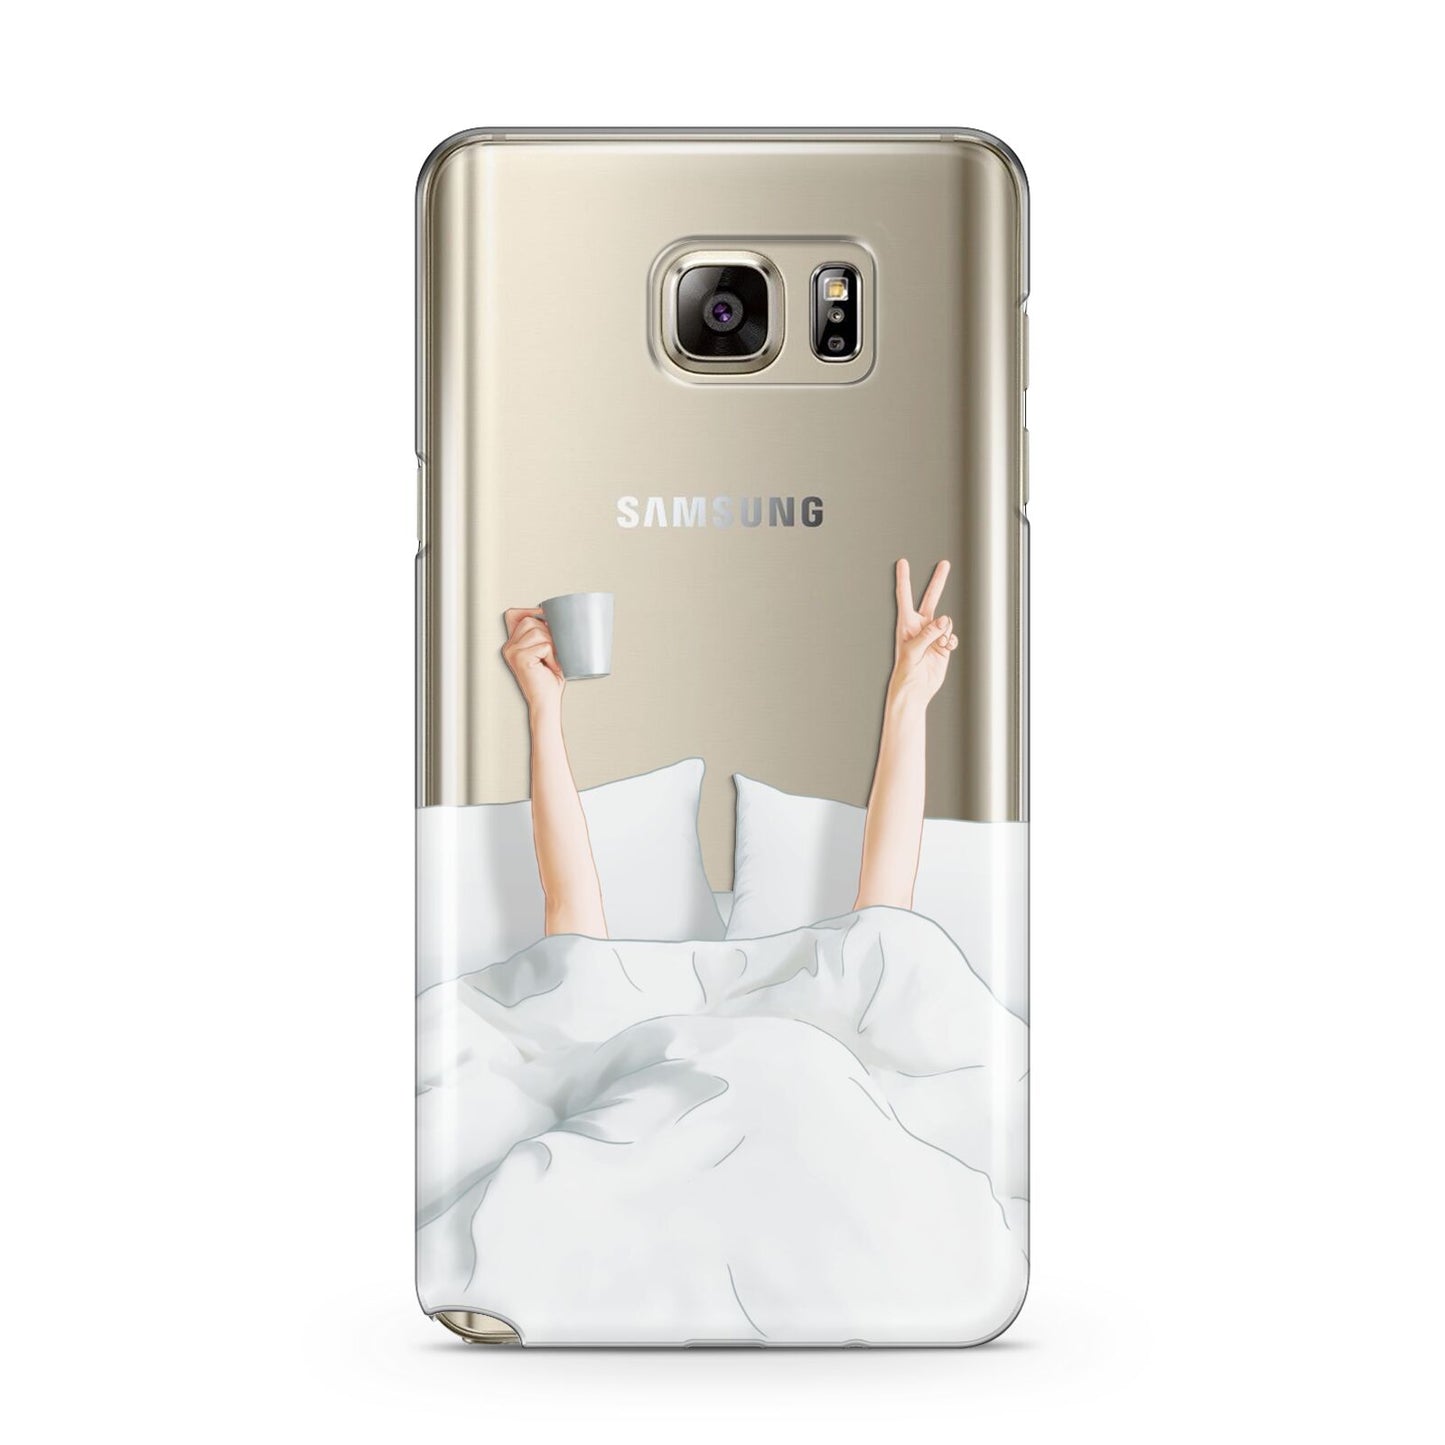 Morning Coffee Samsung Galaxy Note 5 Case